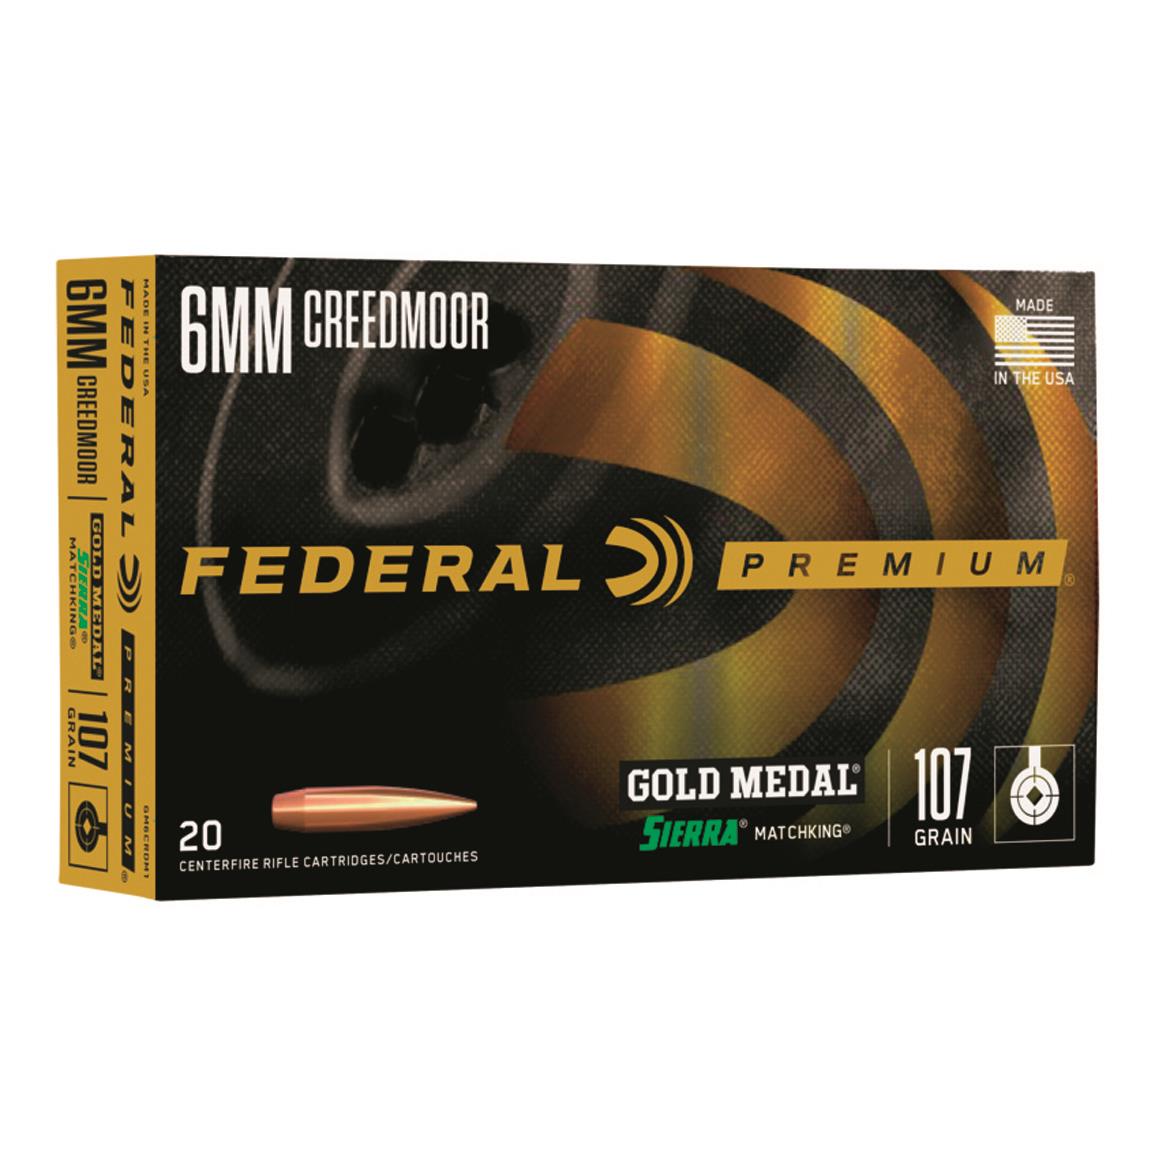 Federal Premium Gold Medal, 6mm Creedmoor, Sierra MatchKing BTHP, 107 Grain, 20 Rounds